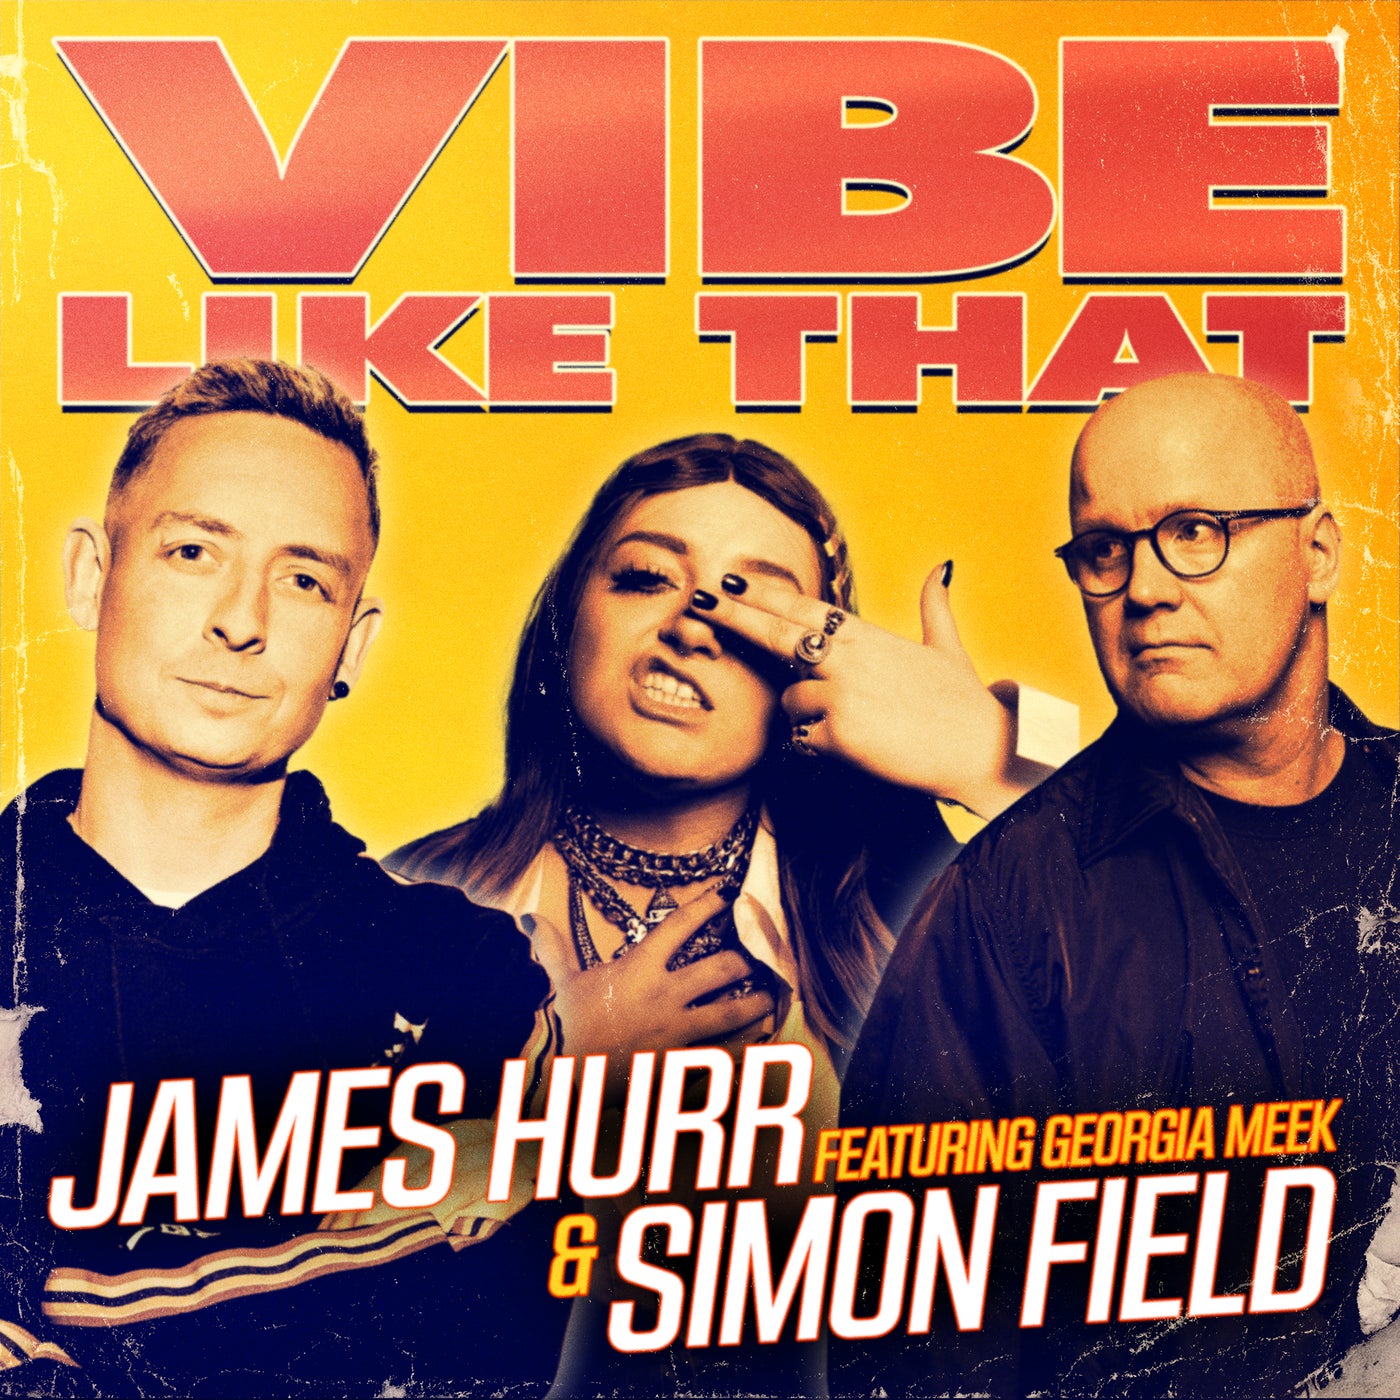 James Hurr feat. Georgia Meek & Simon Field - Vibe Like That (Extended Mix)